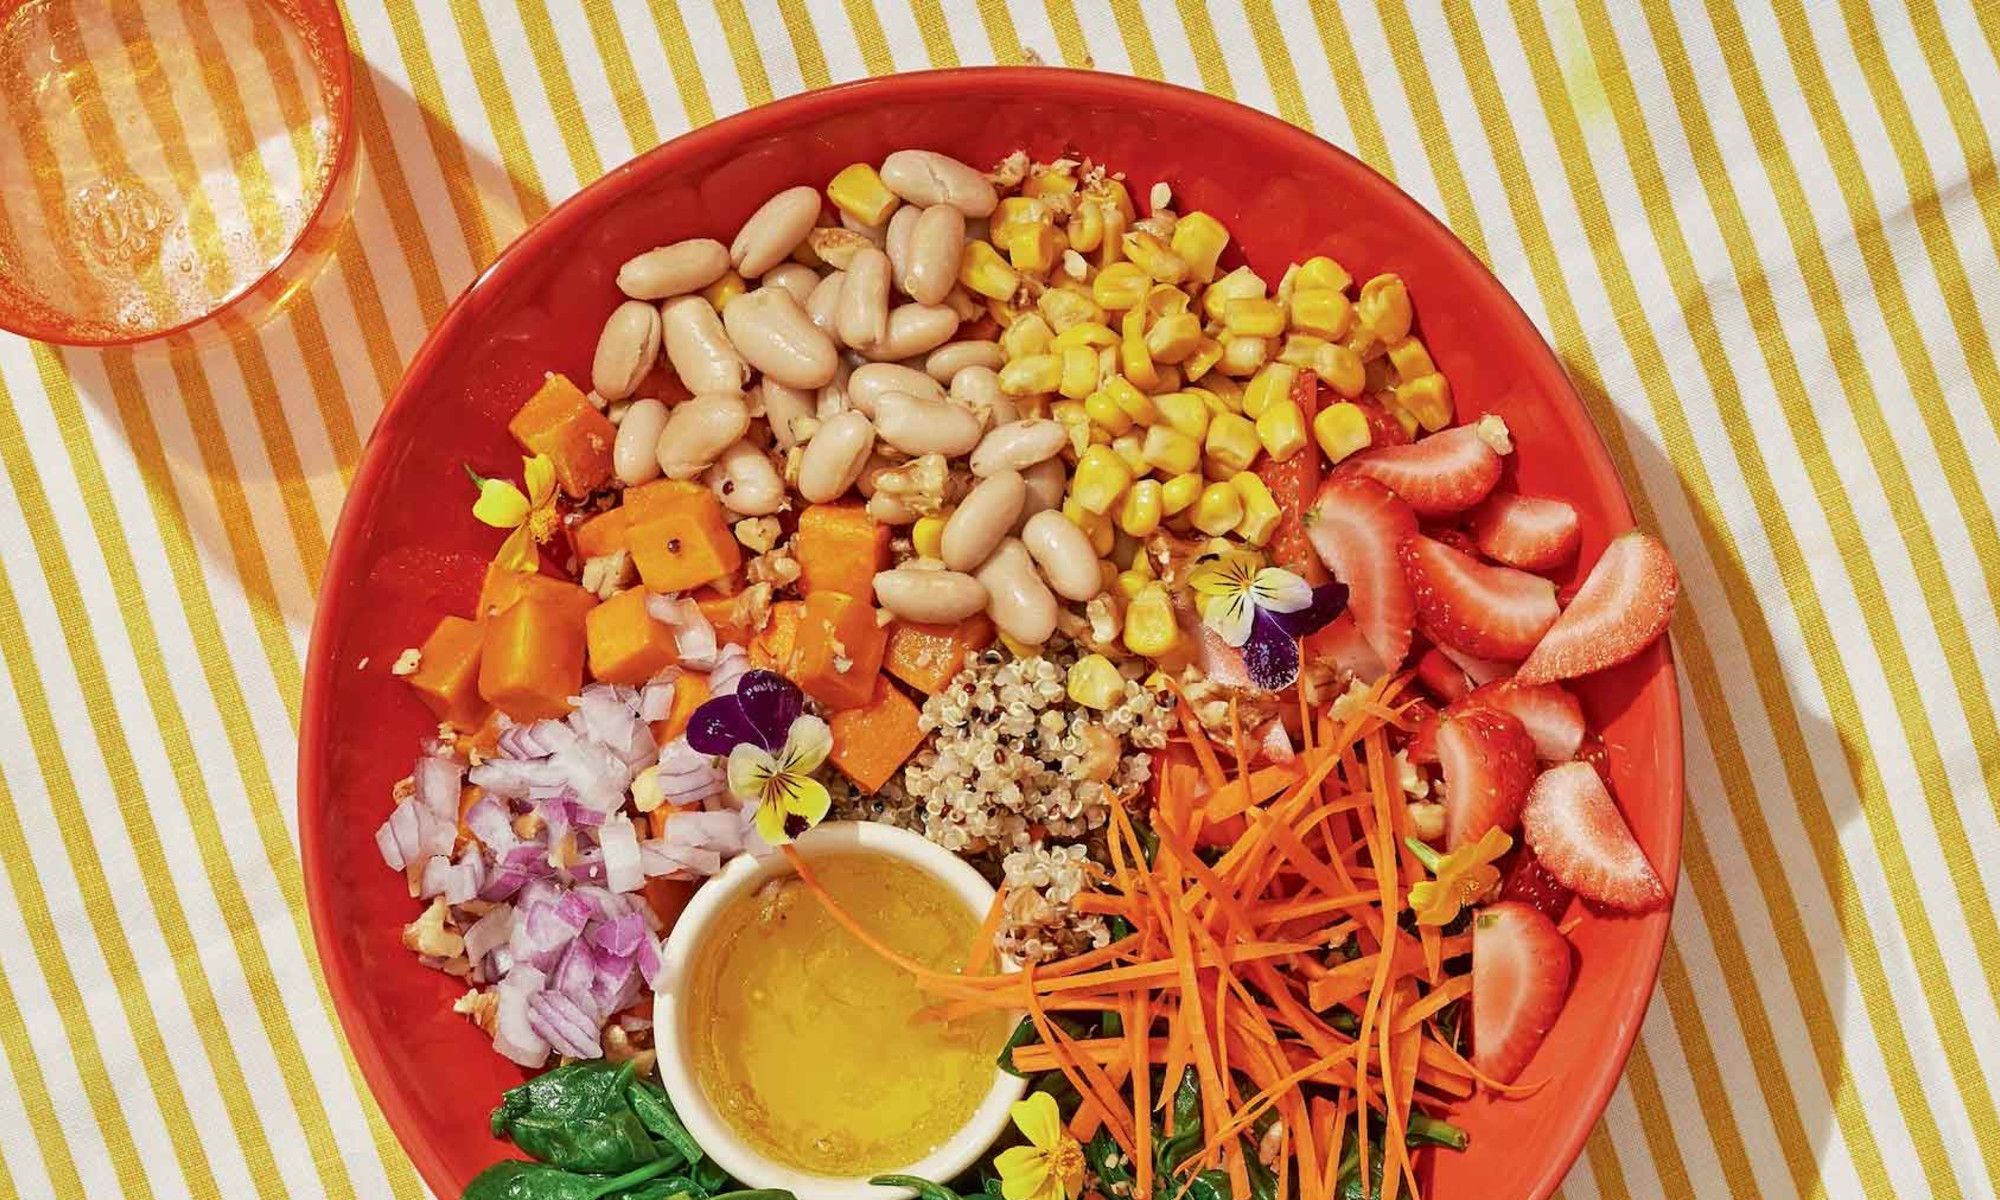 Need A Quick & Balanced Lunch? Try This White Bean & Squash Grain Bowl